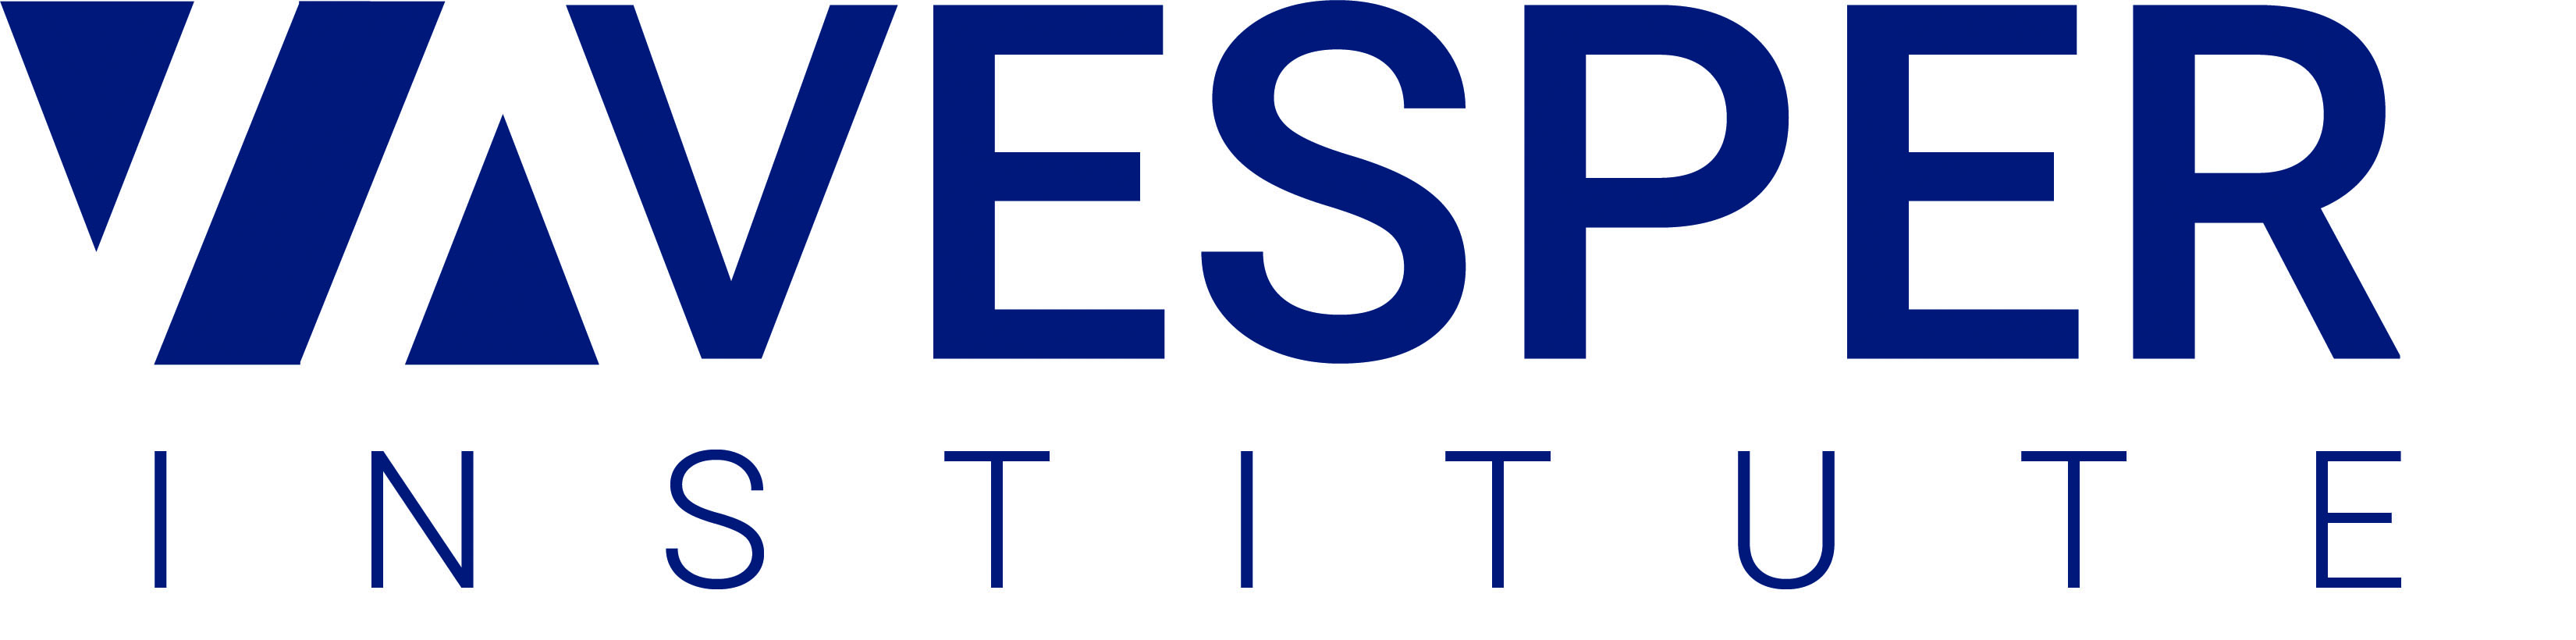 Vesper Institute Logo